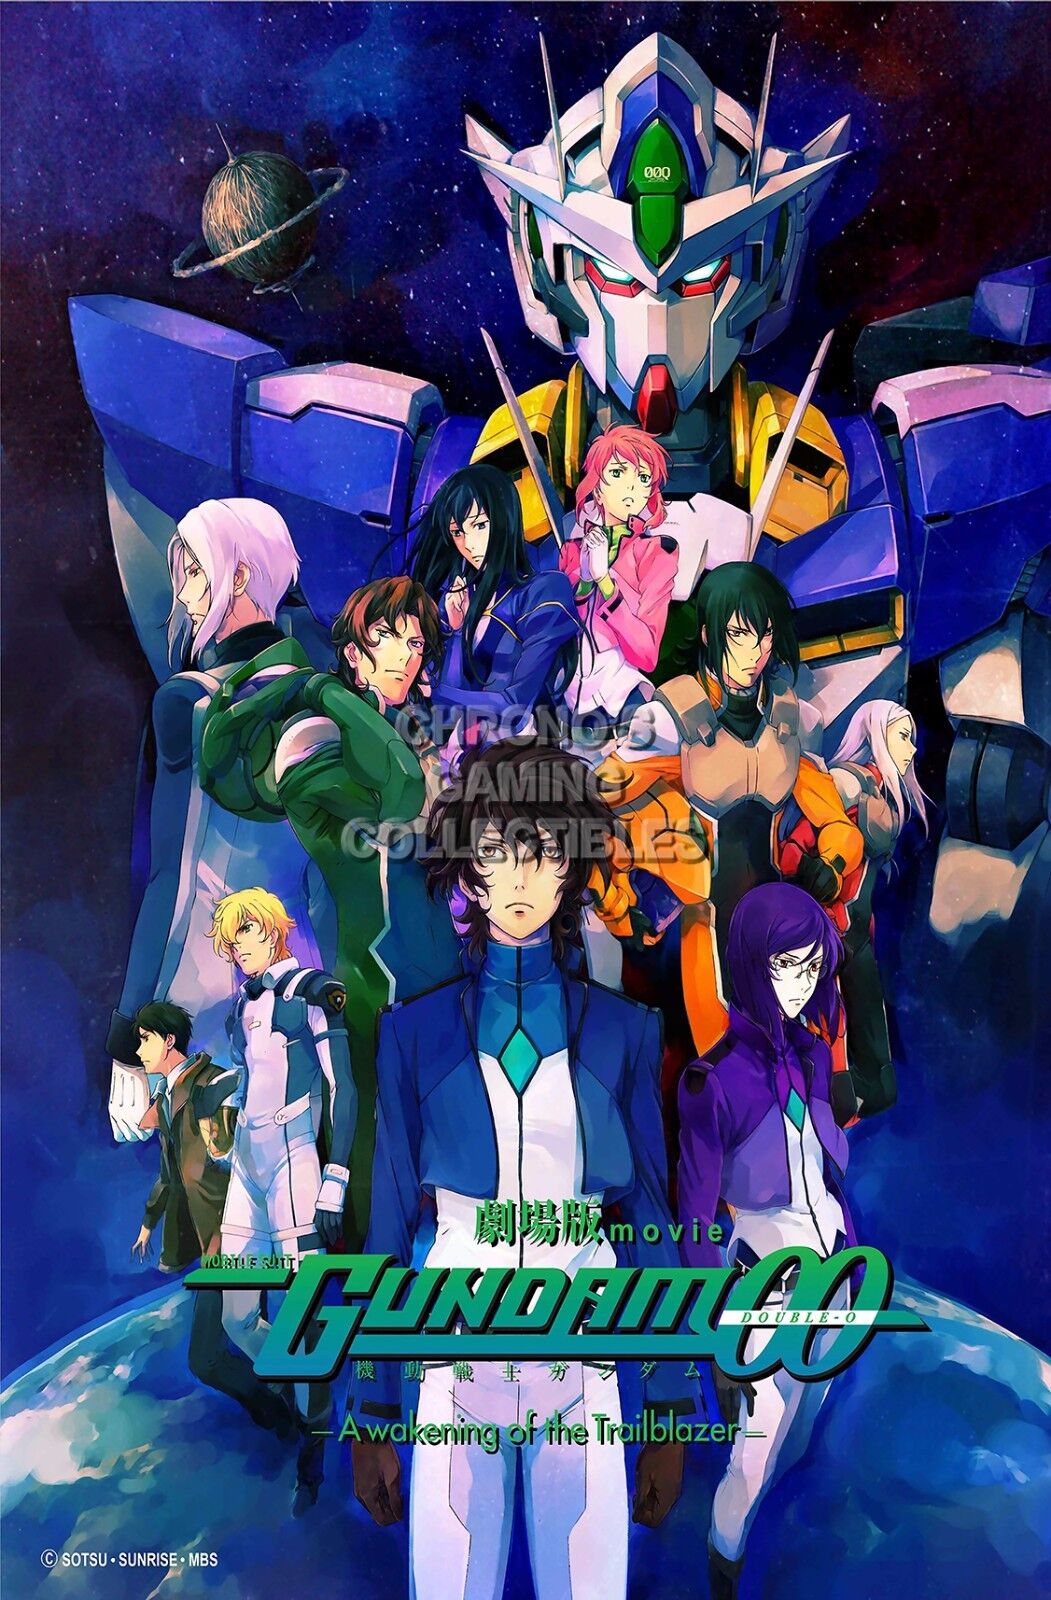 RGC Huge Poster - Mobile Suit Gundam 00 Anime Poster Glossy Finish - ANI056  | eBay